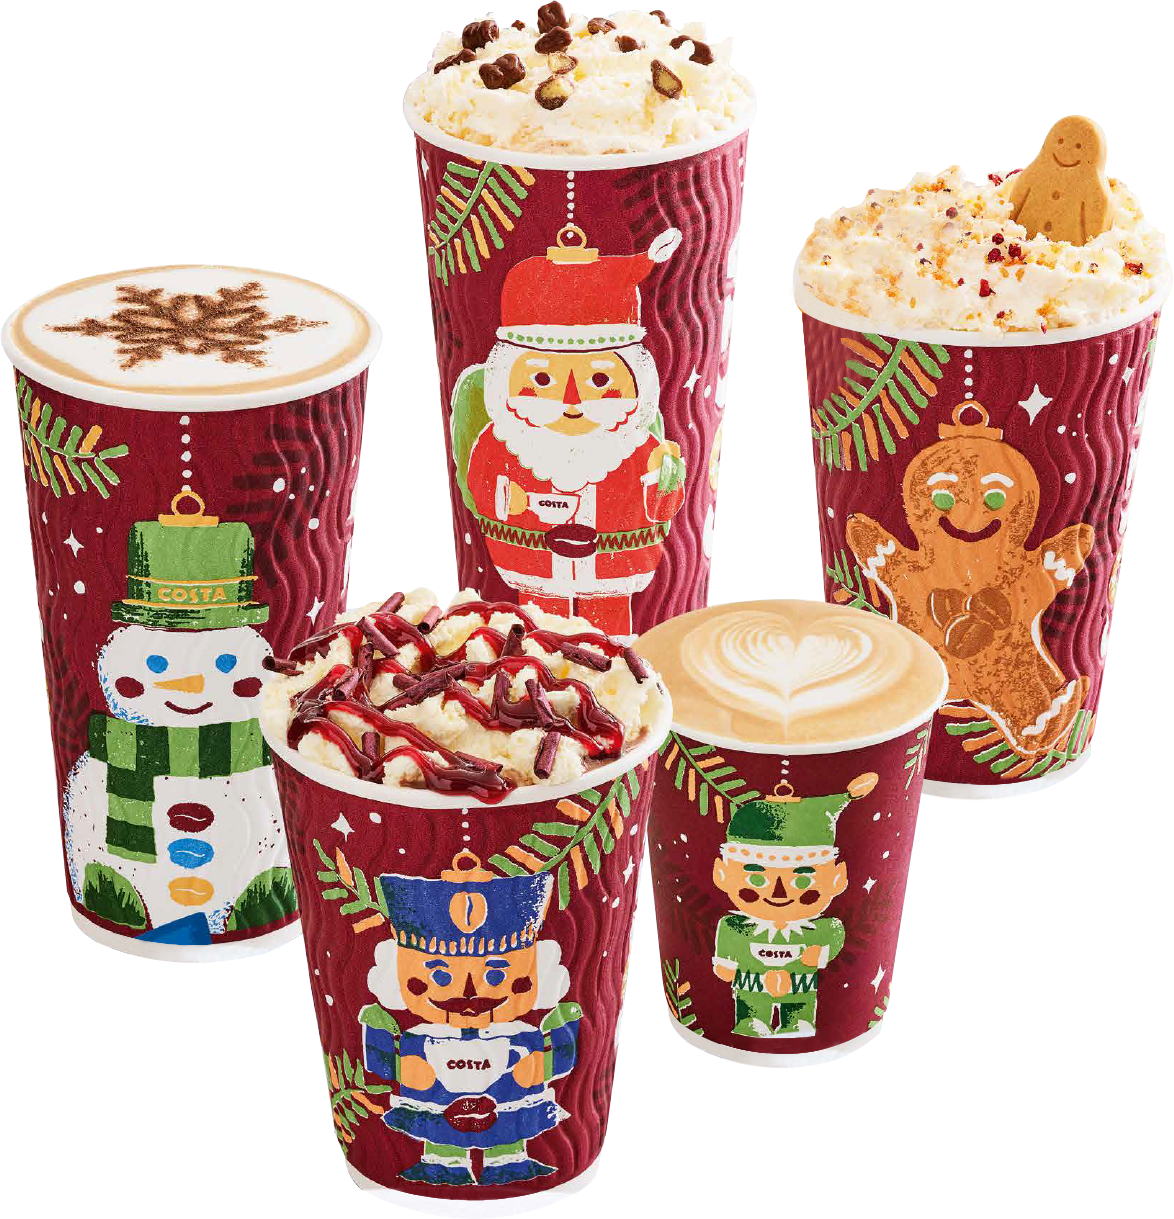 Drinks in Costa's festive cups